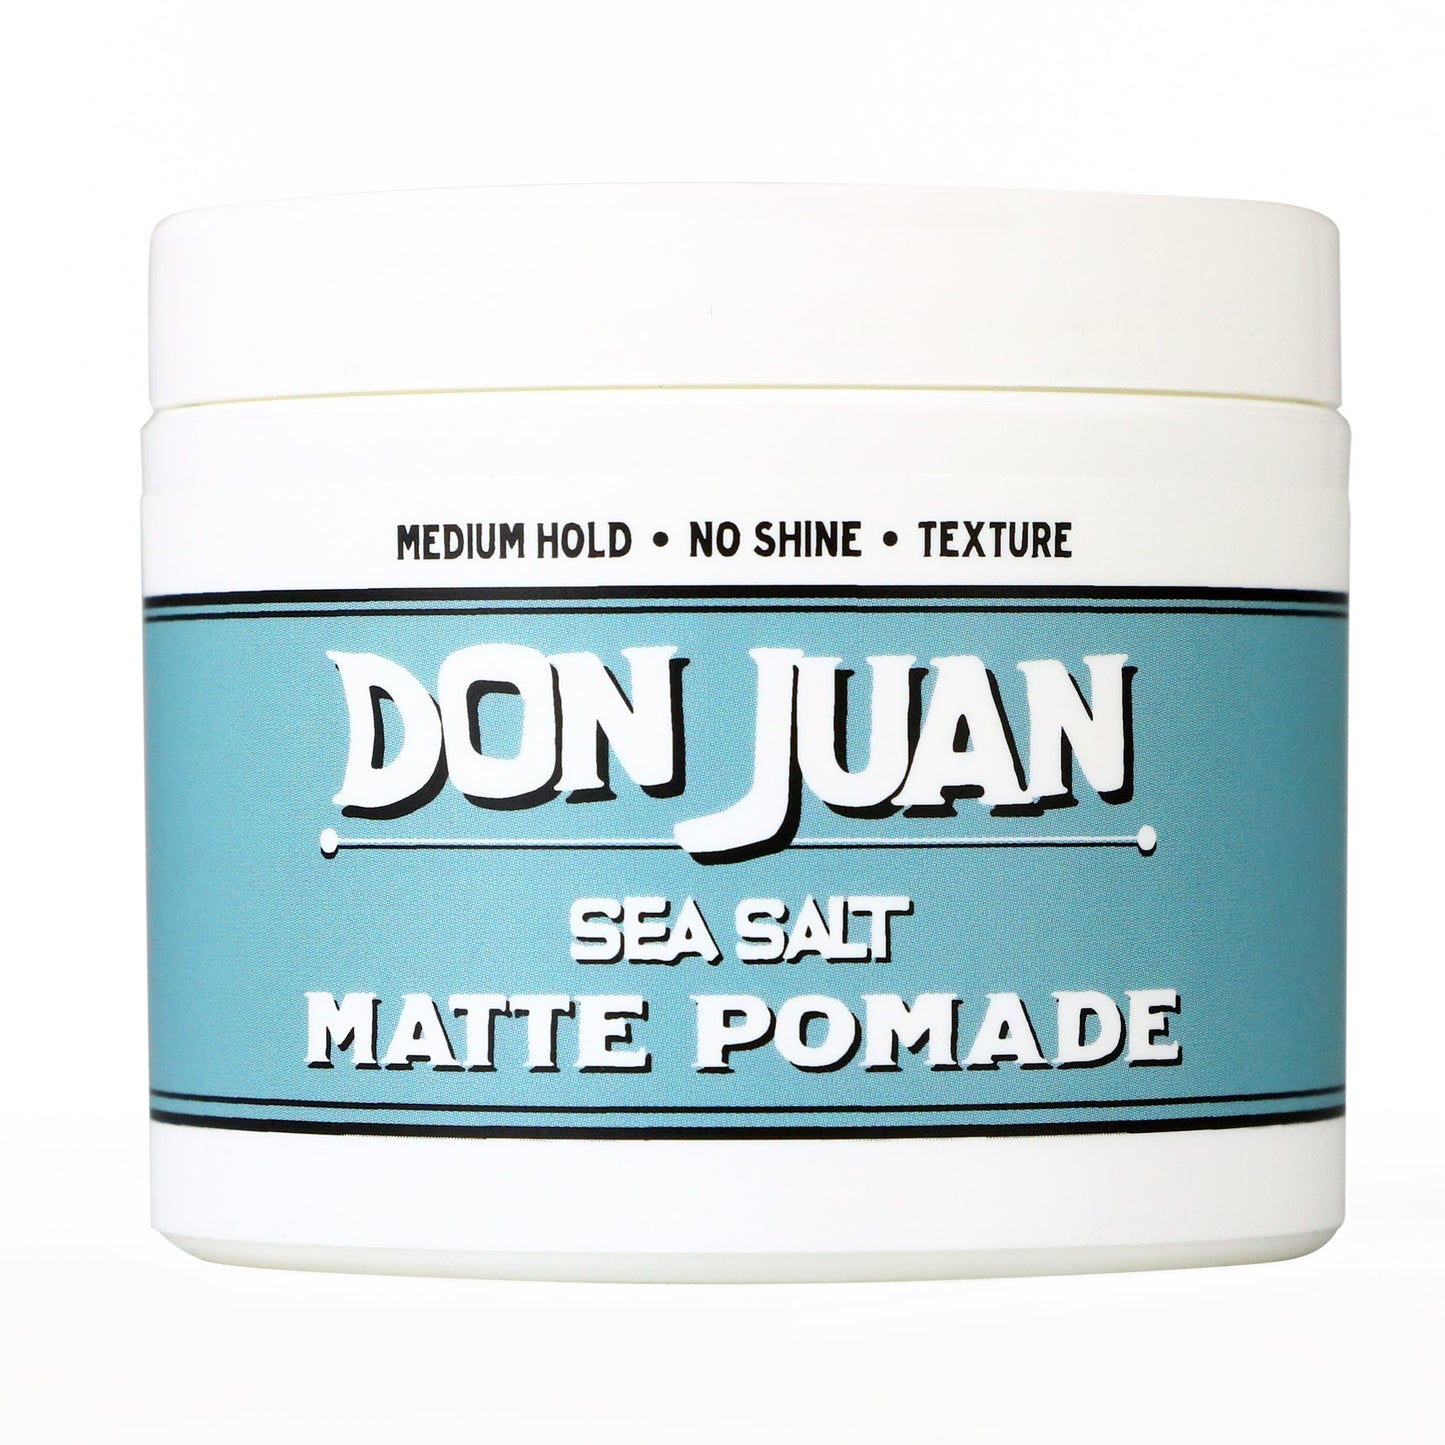 DON JUAN SEA SALT MATTE POMADE 113 grs.